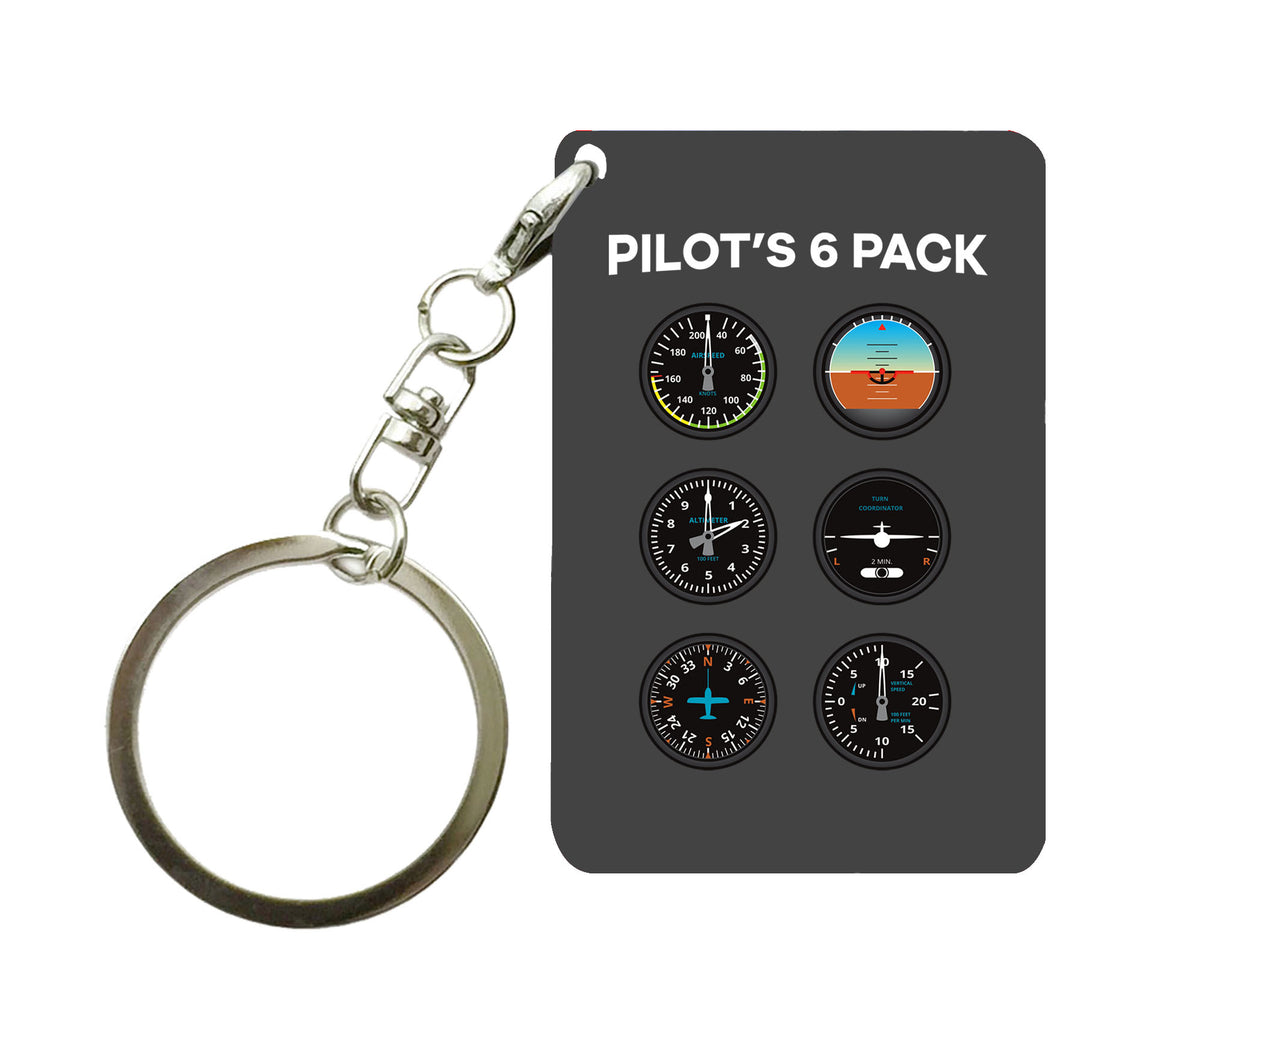 Pilot's 6 Pack Designed Key Chains